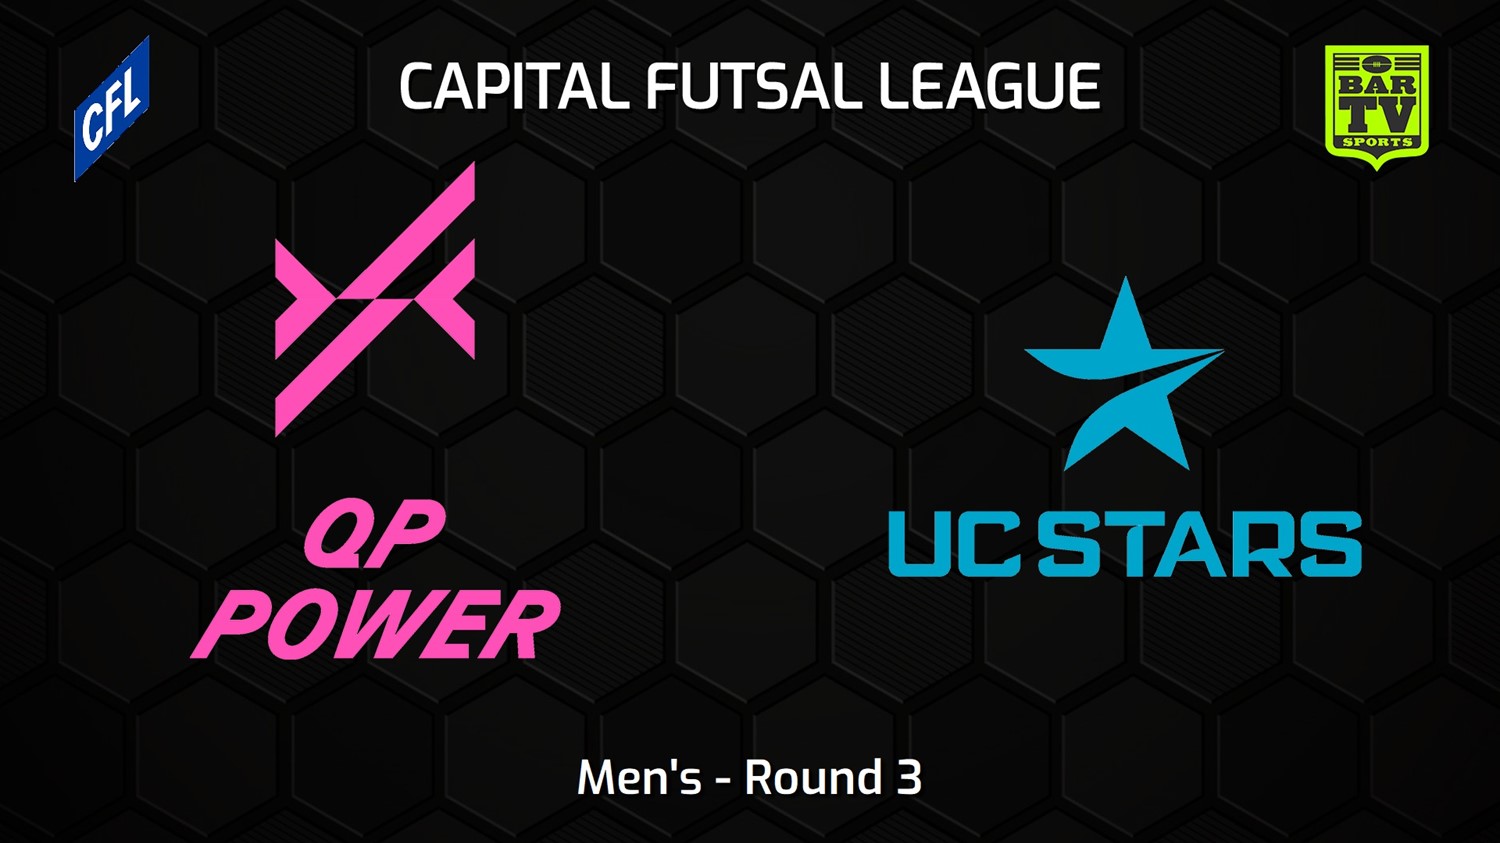 221112-Capital Football Futsal Round 3 - Men's - Queanbeyan-Palerang Power v UC Stars FC Minigame Slate Image